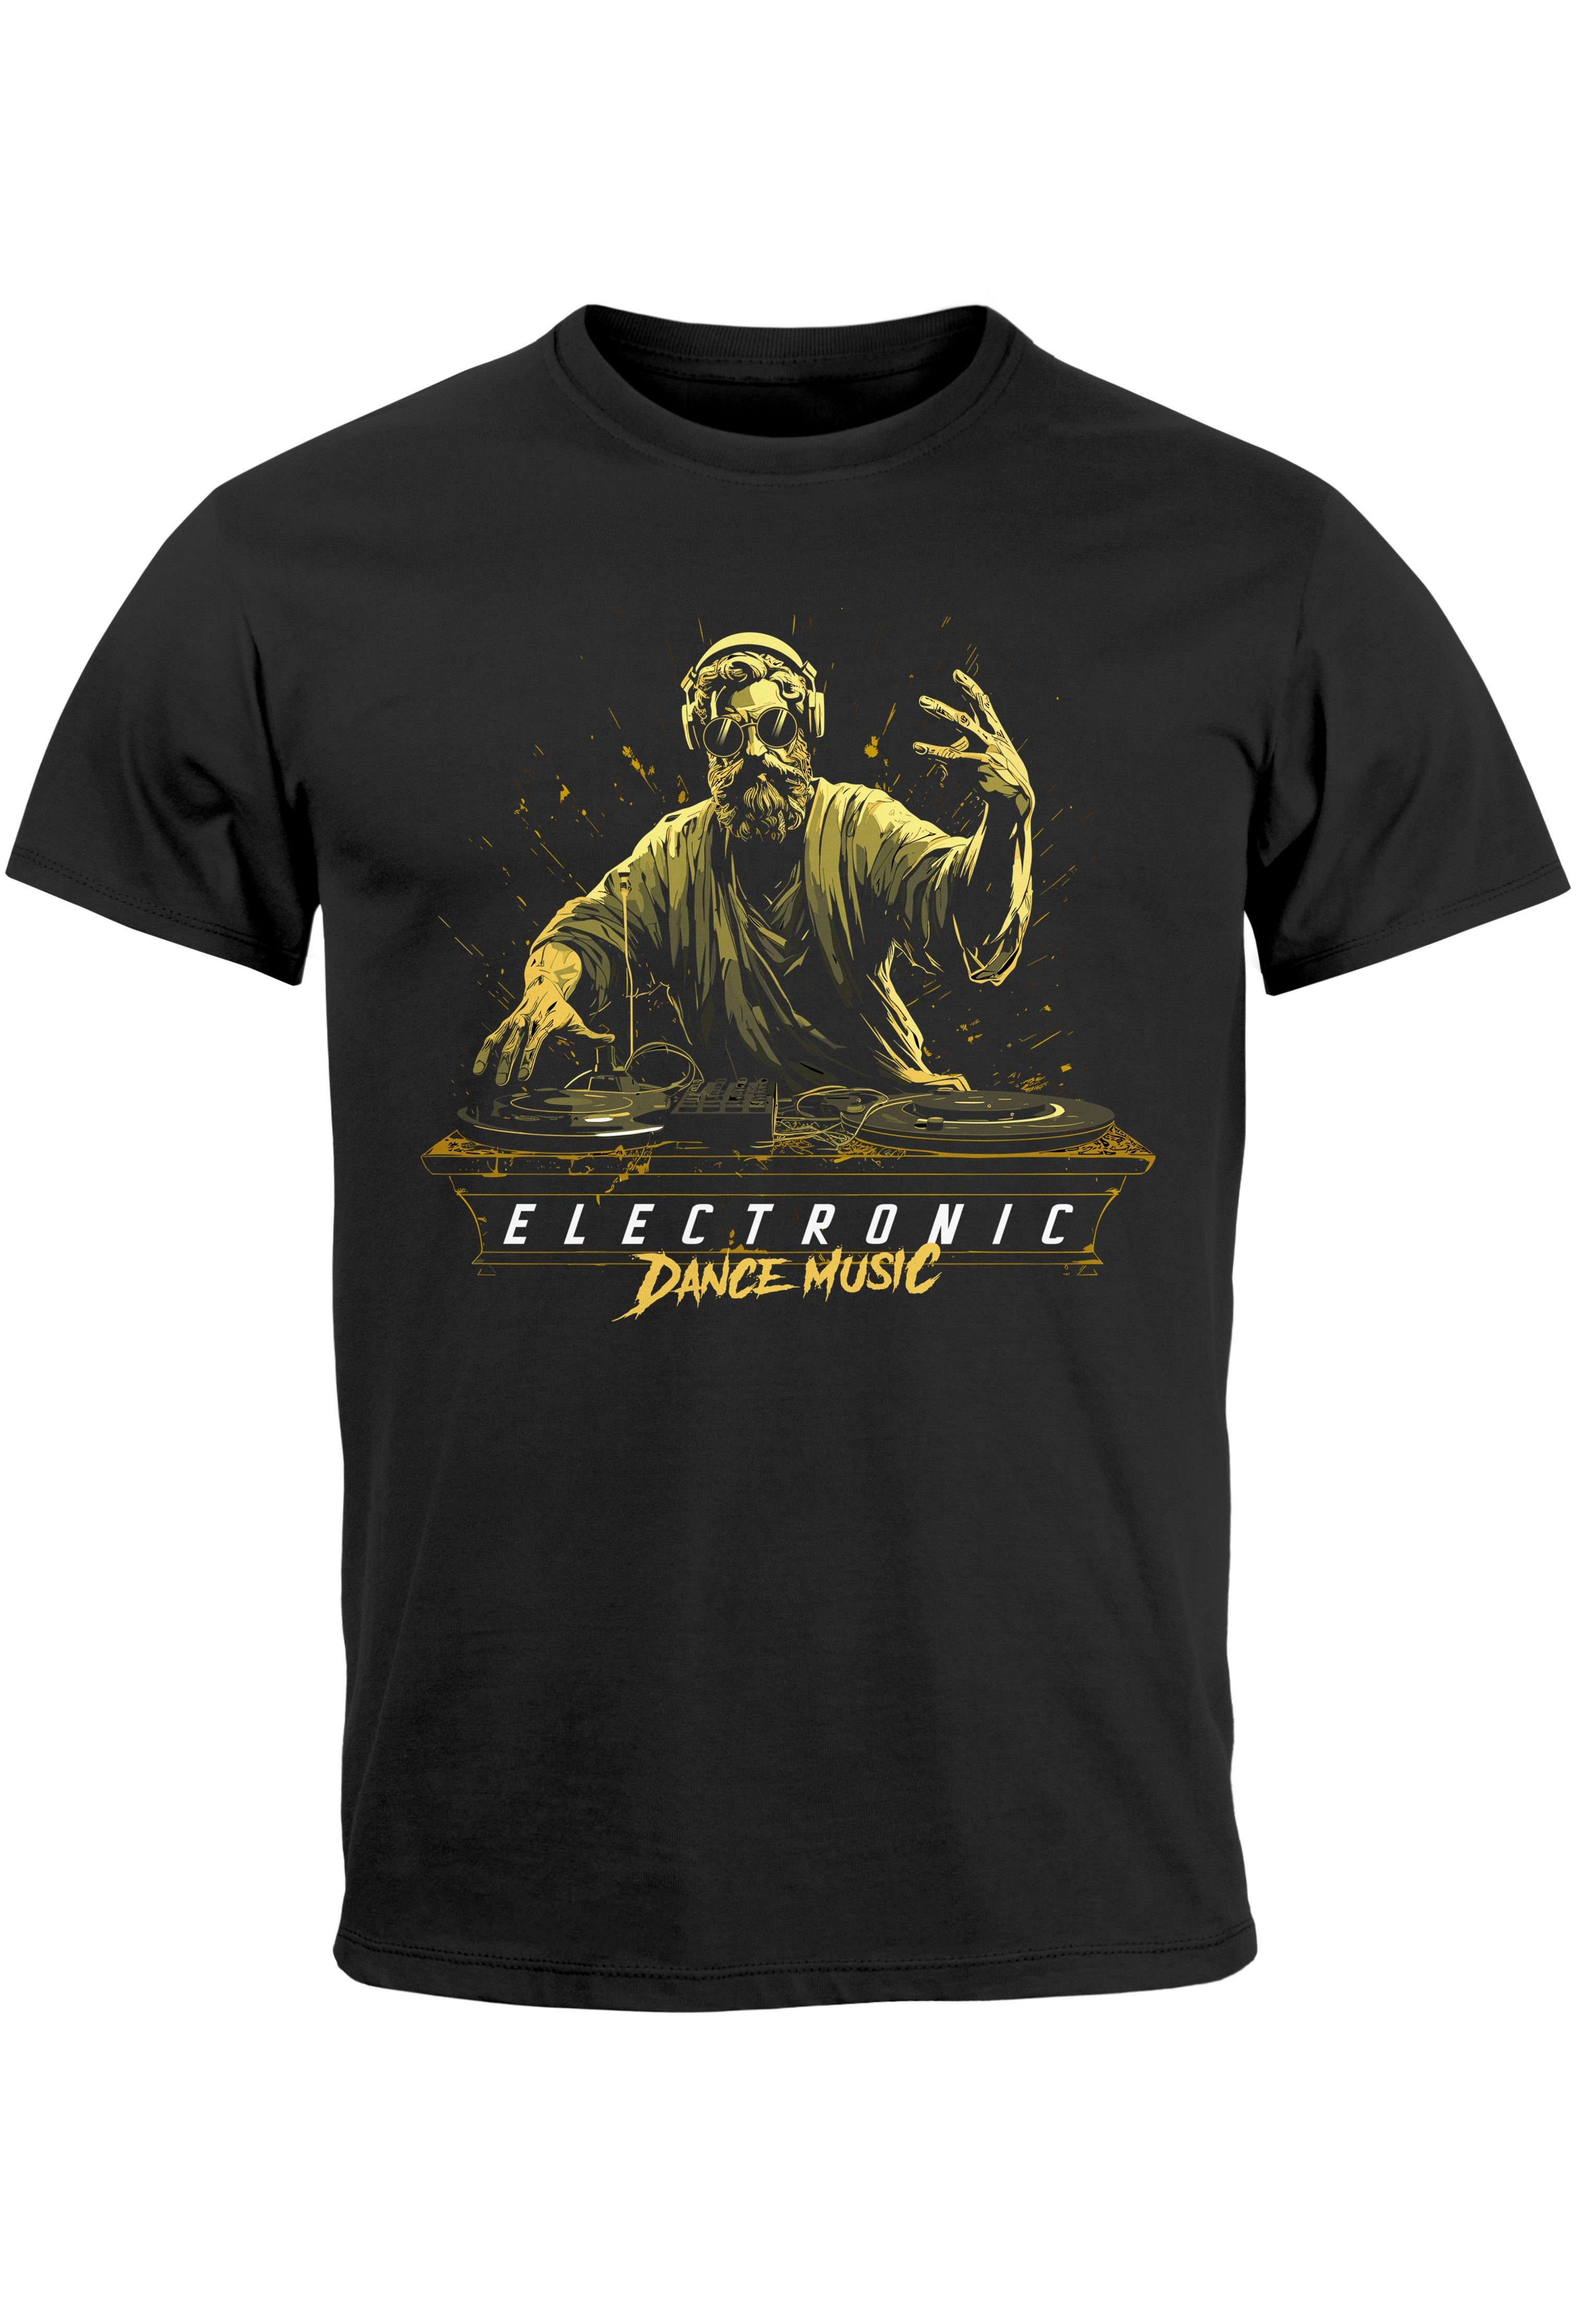 Neverless Print-Shirt Herren T-Shirt Eletronic Dance Music MichelangeloTechno DJ Fashion Str mit Print schwarz